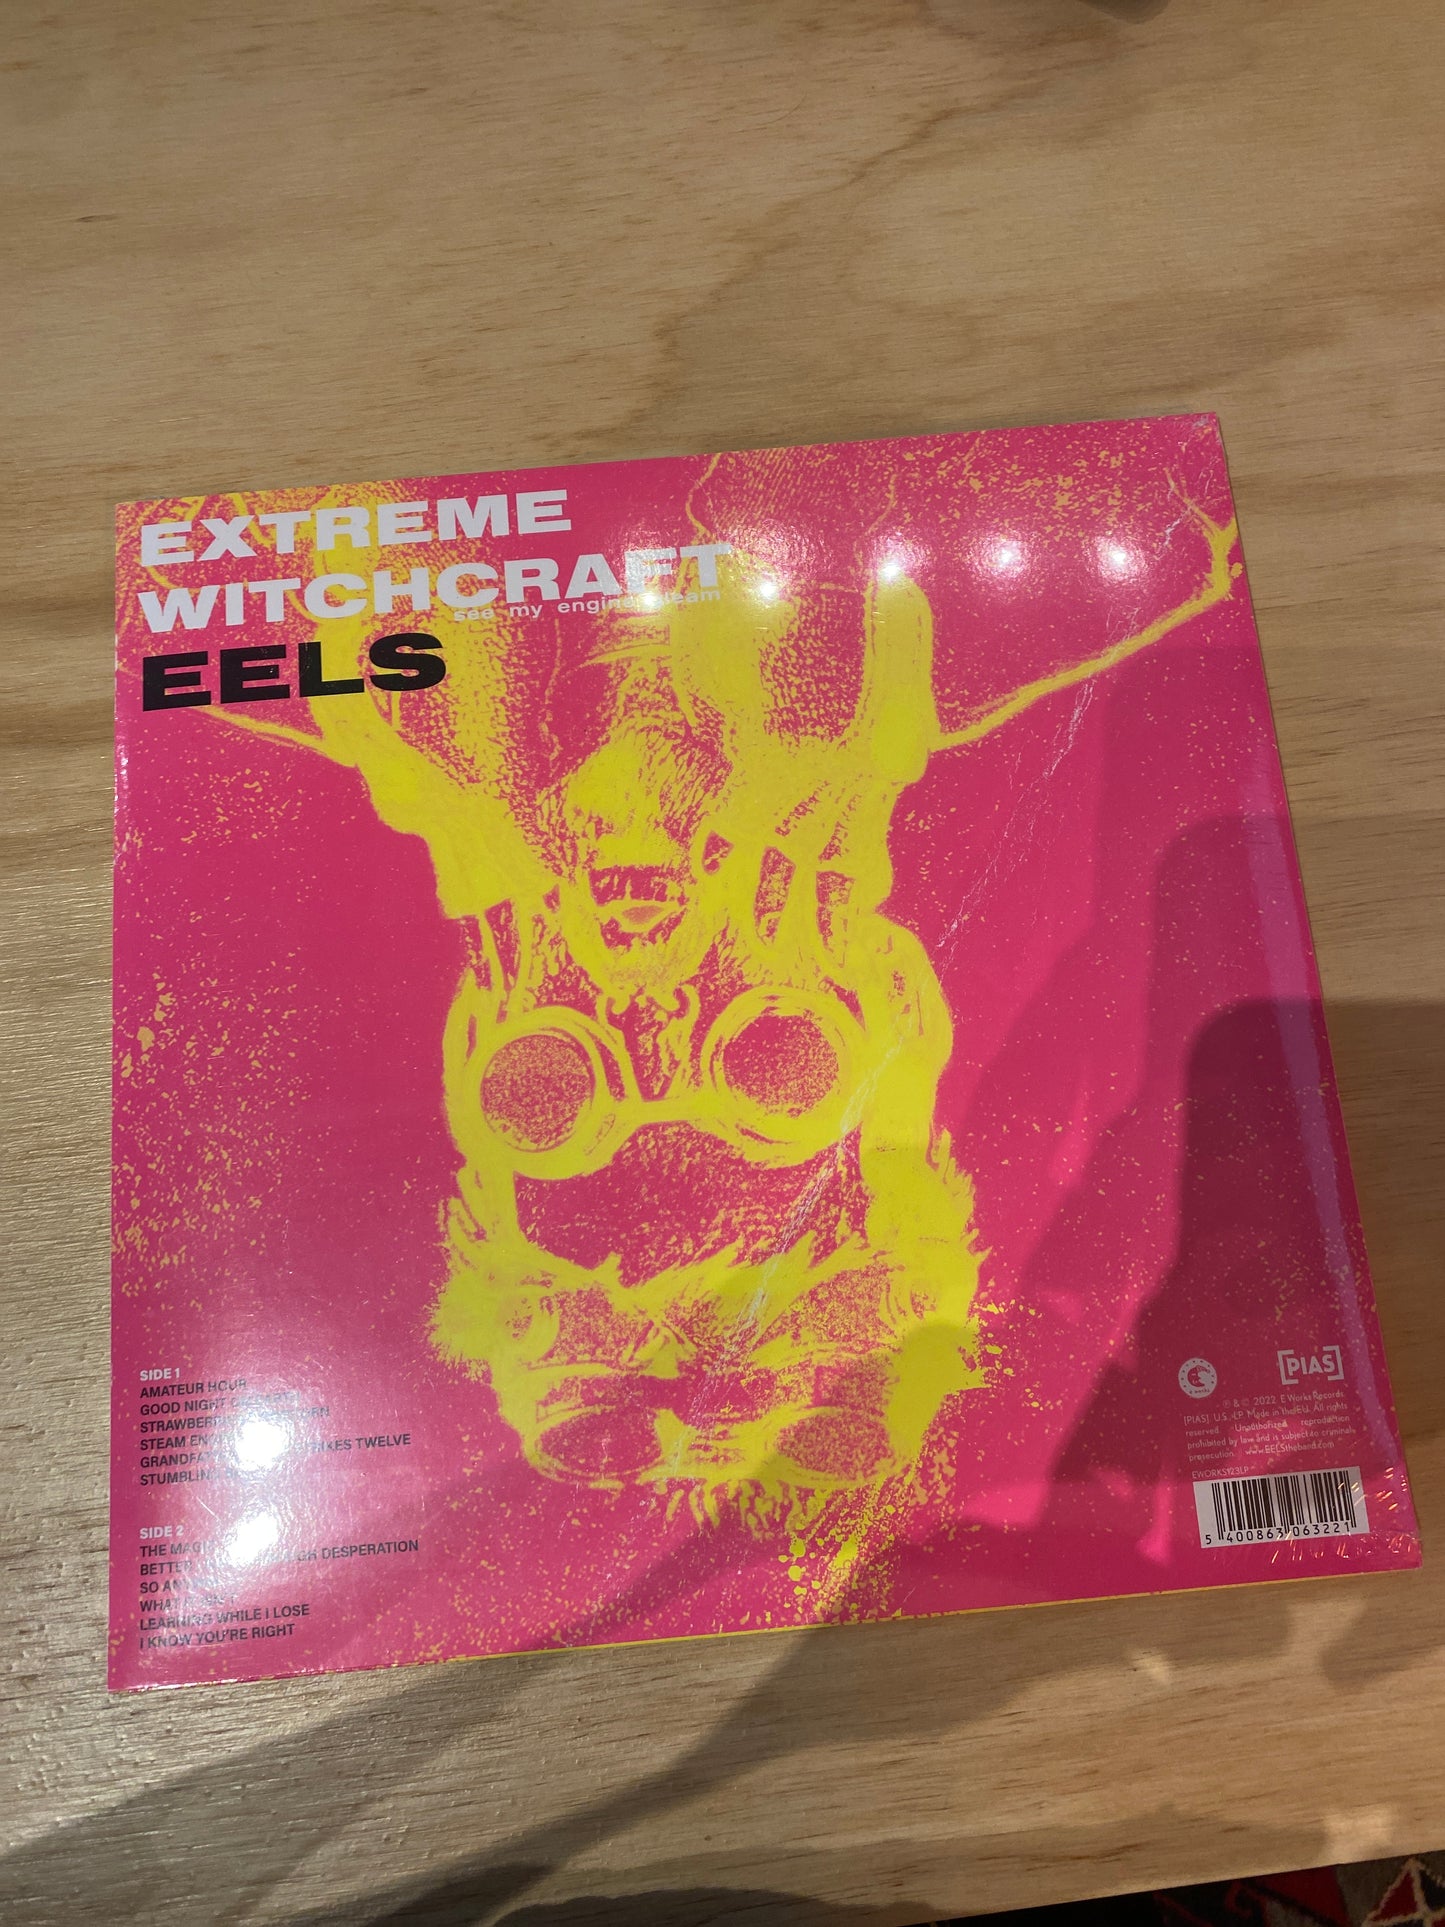 Eels - Extreme Whitchcraft - Vinyl LP